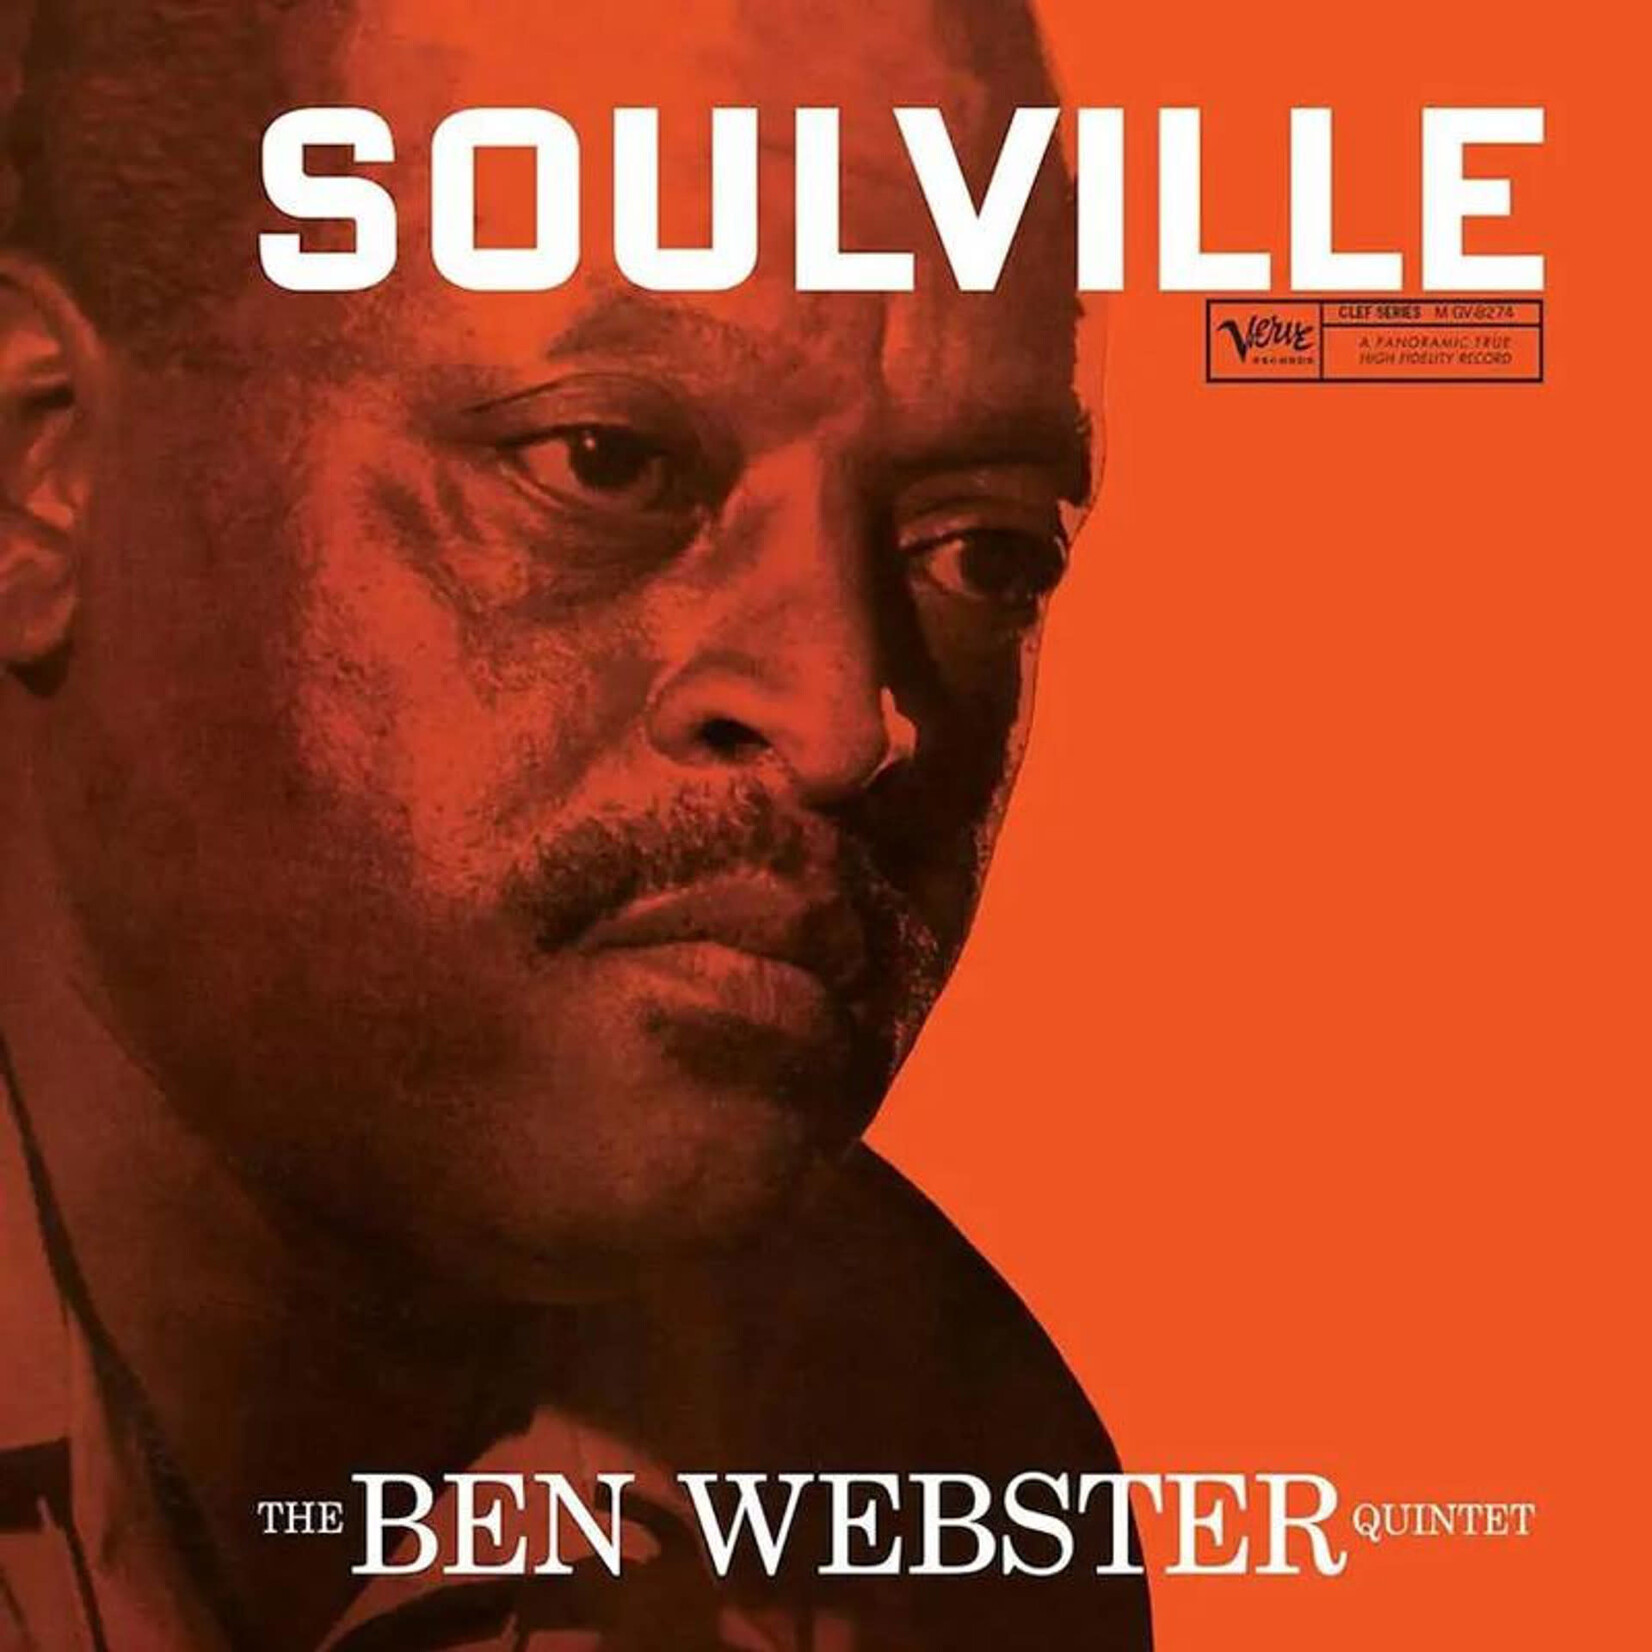 Vinyl The Ben Webster Quintet - Soulville (Acoustic Sounds)